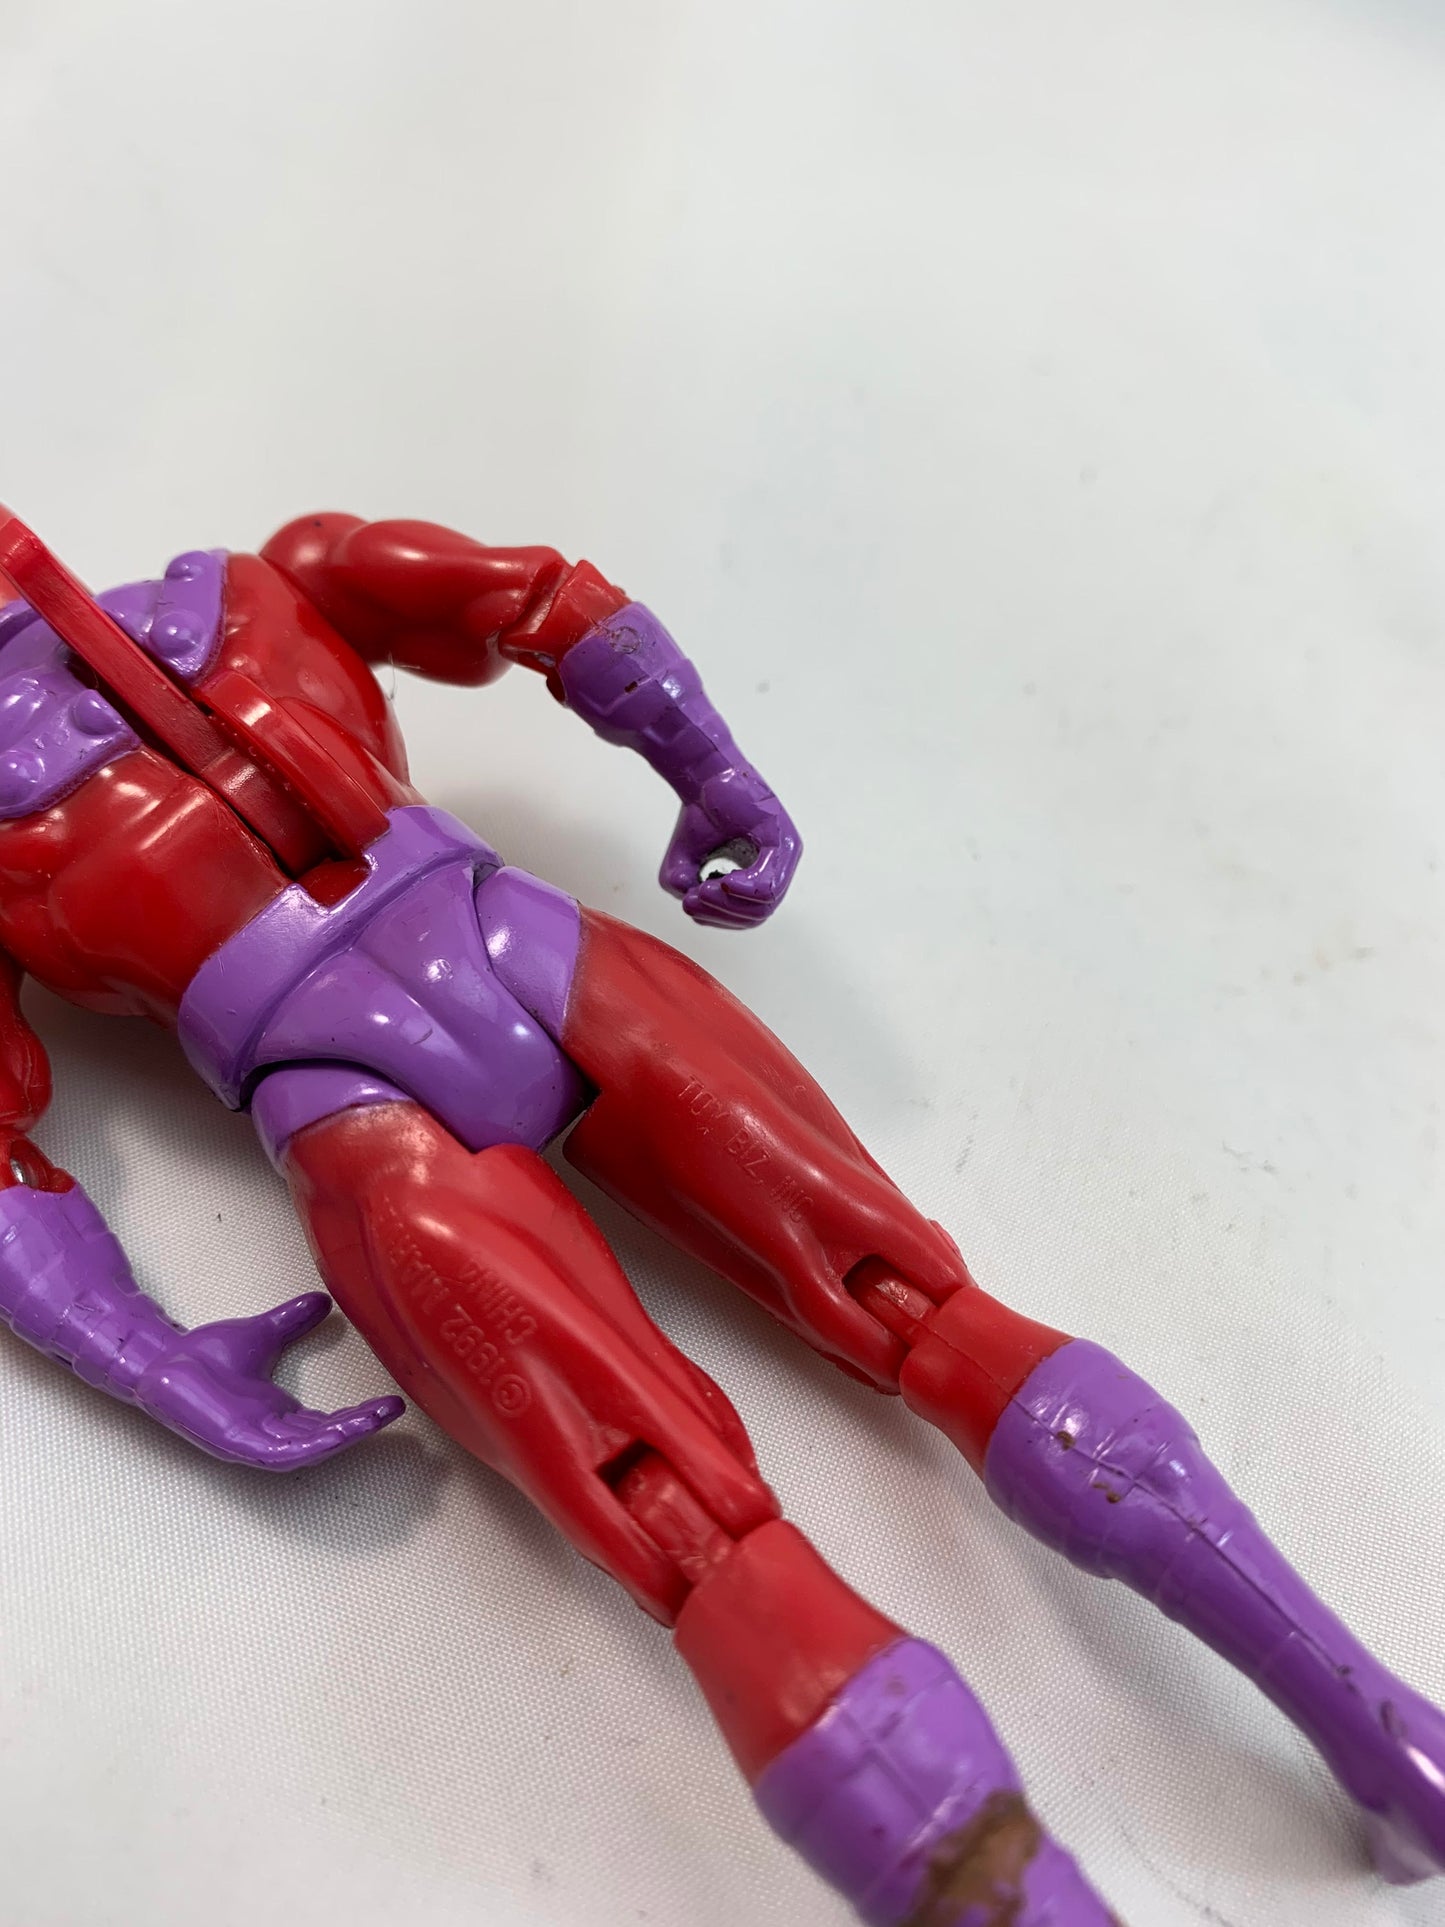 Toy Biz Marvel X-Men Magneto 1992 - Loose